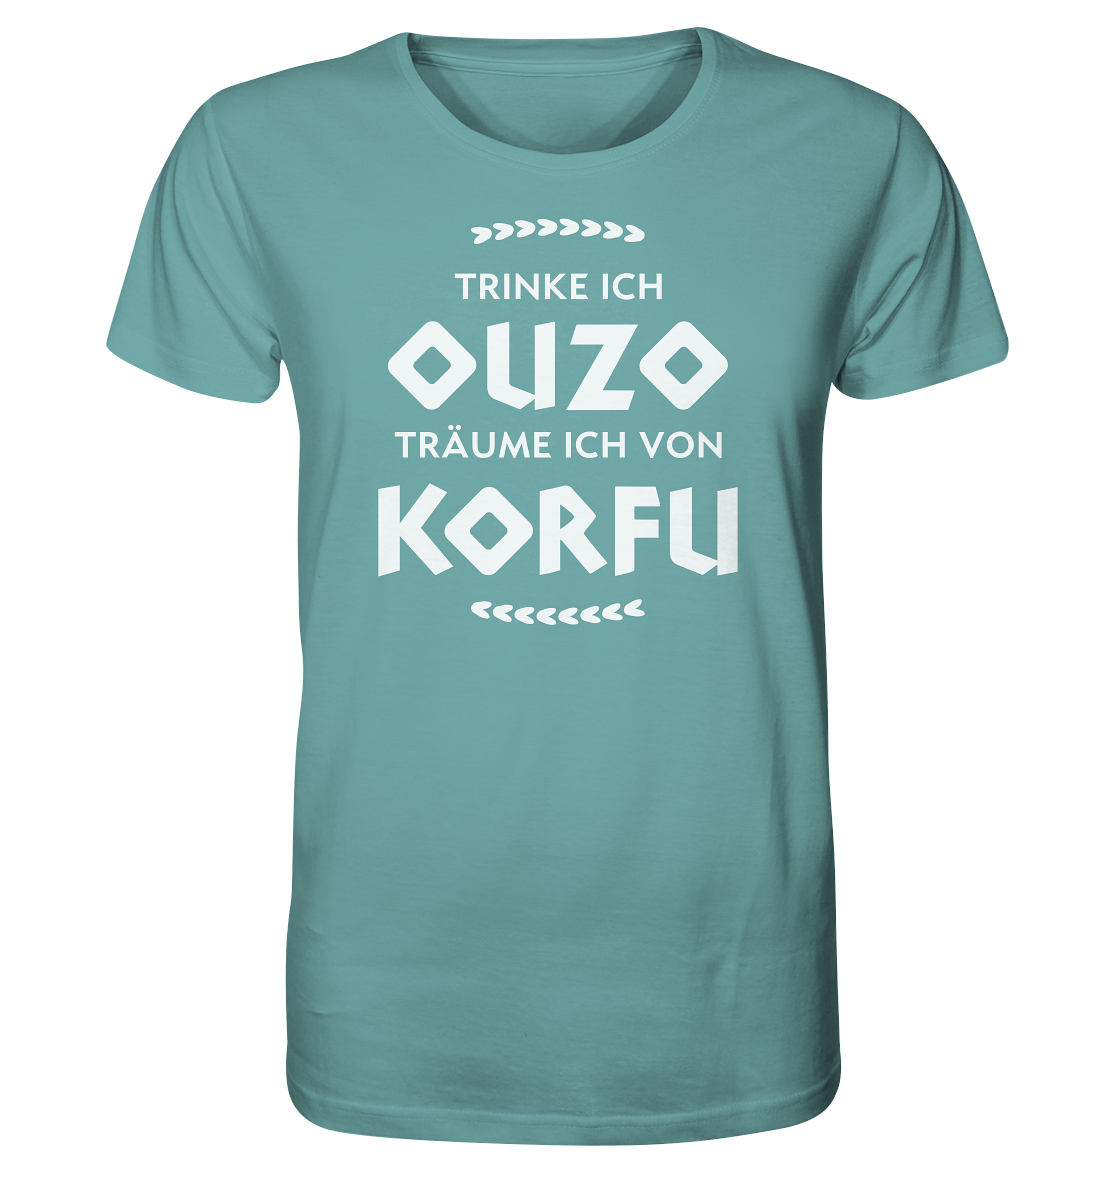 When I drink Ouzo I dream of Corfu - Organic Shirt